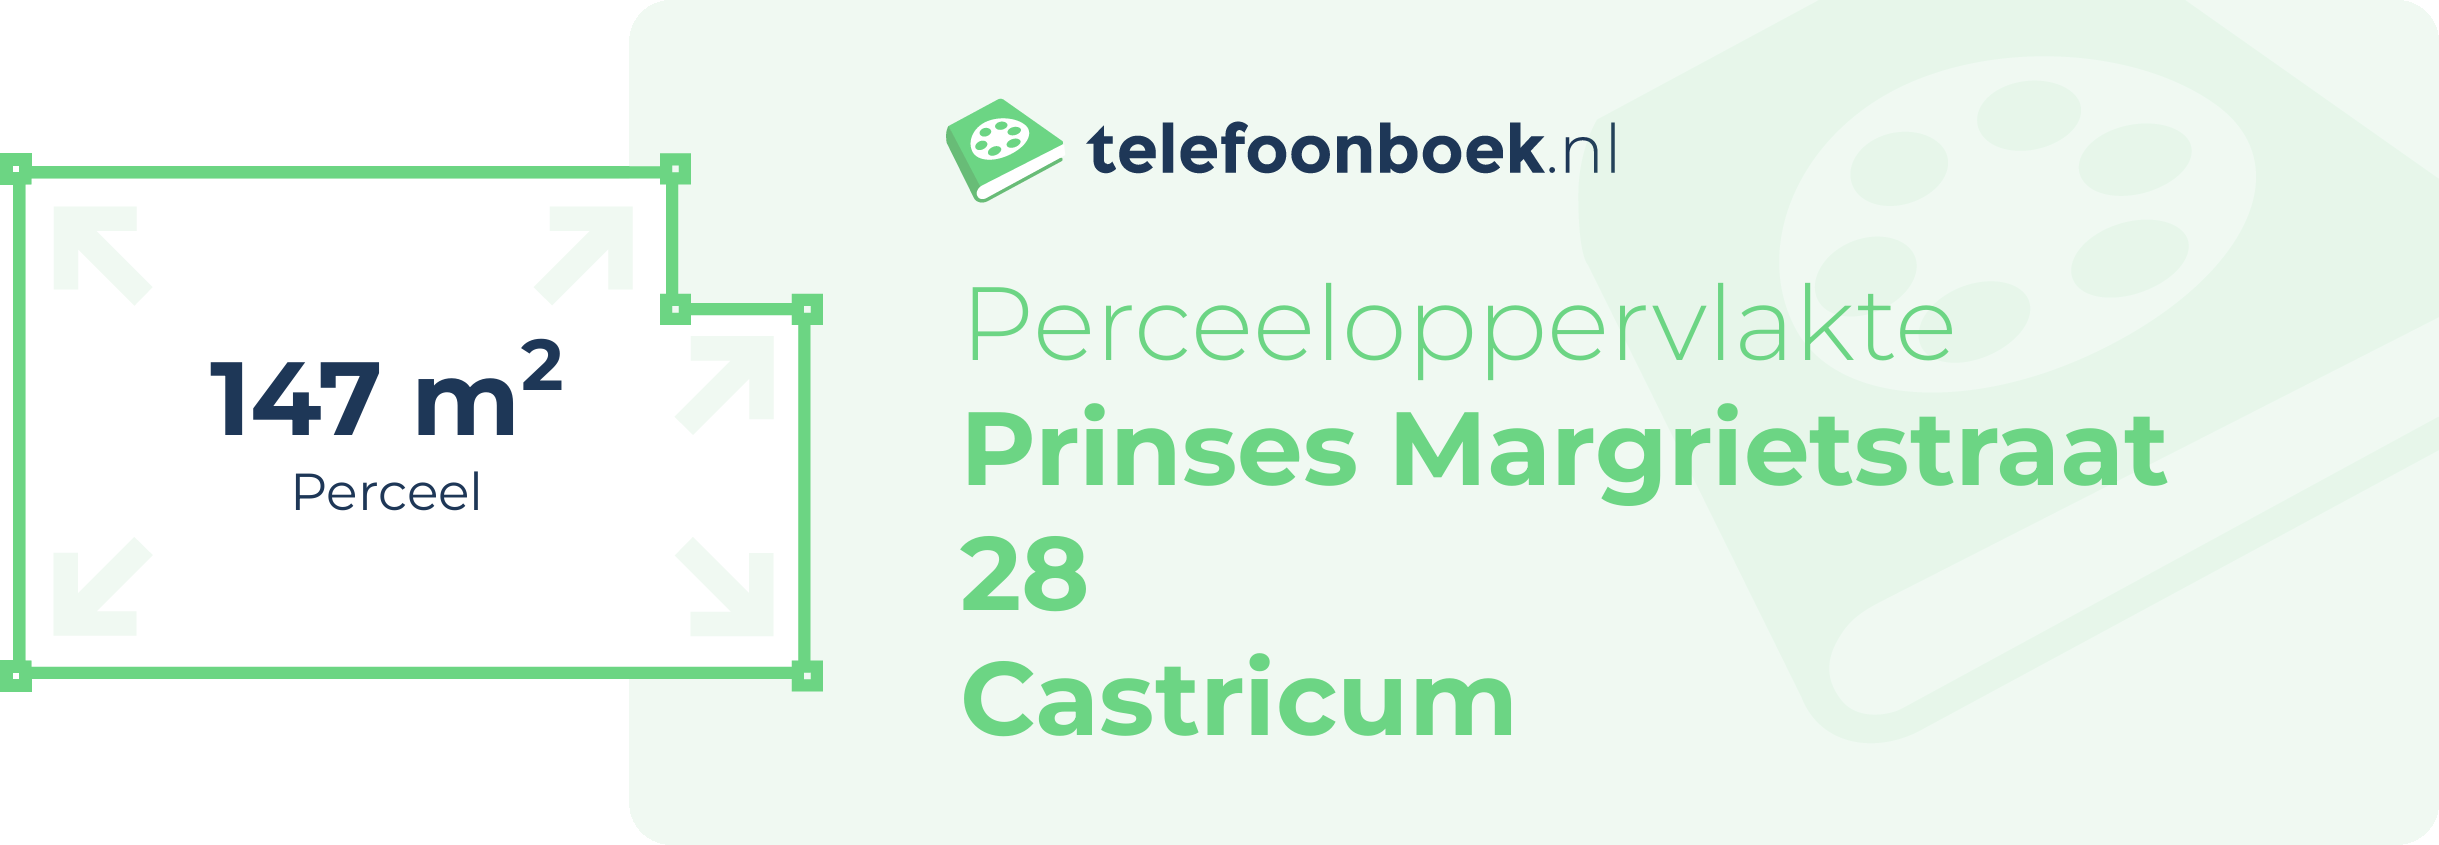 Perceeloppervlakte Prinses Margrietstraat 28 Castricum